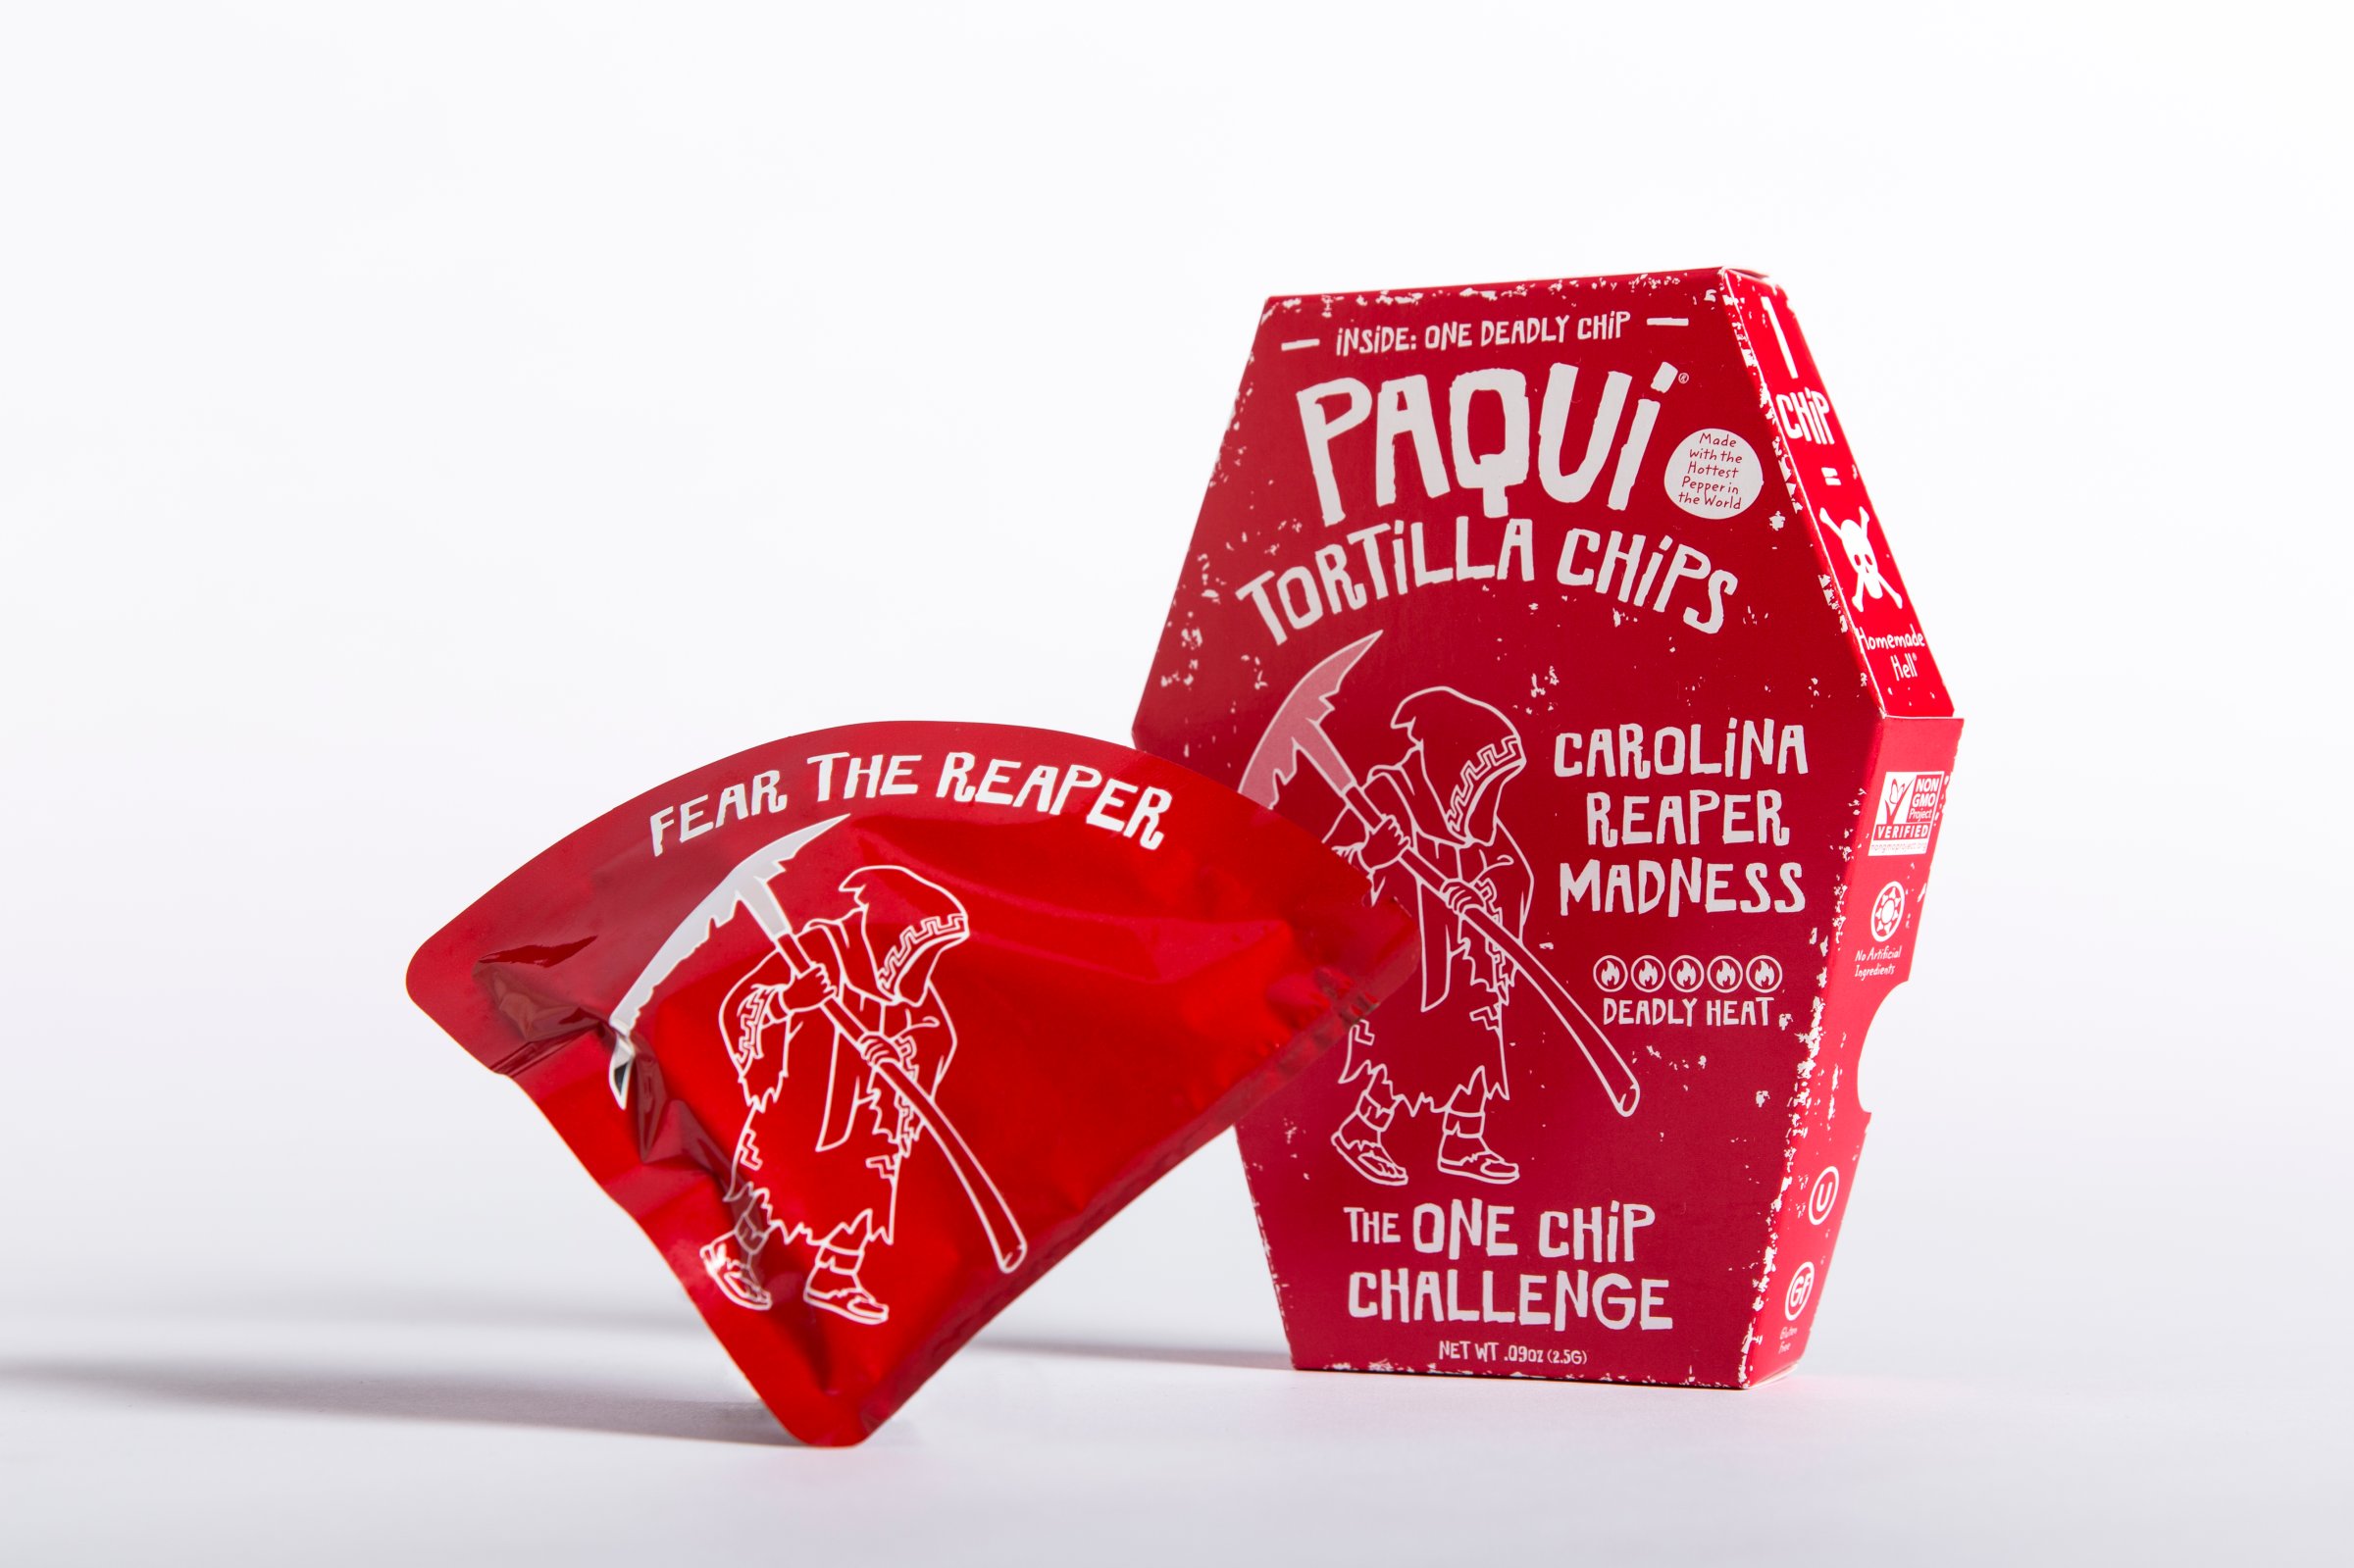 Paqui's Carolina Reaper tortilla chip